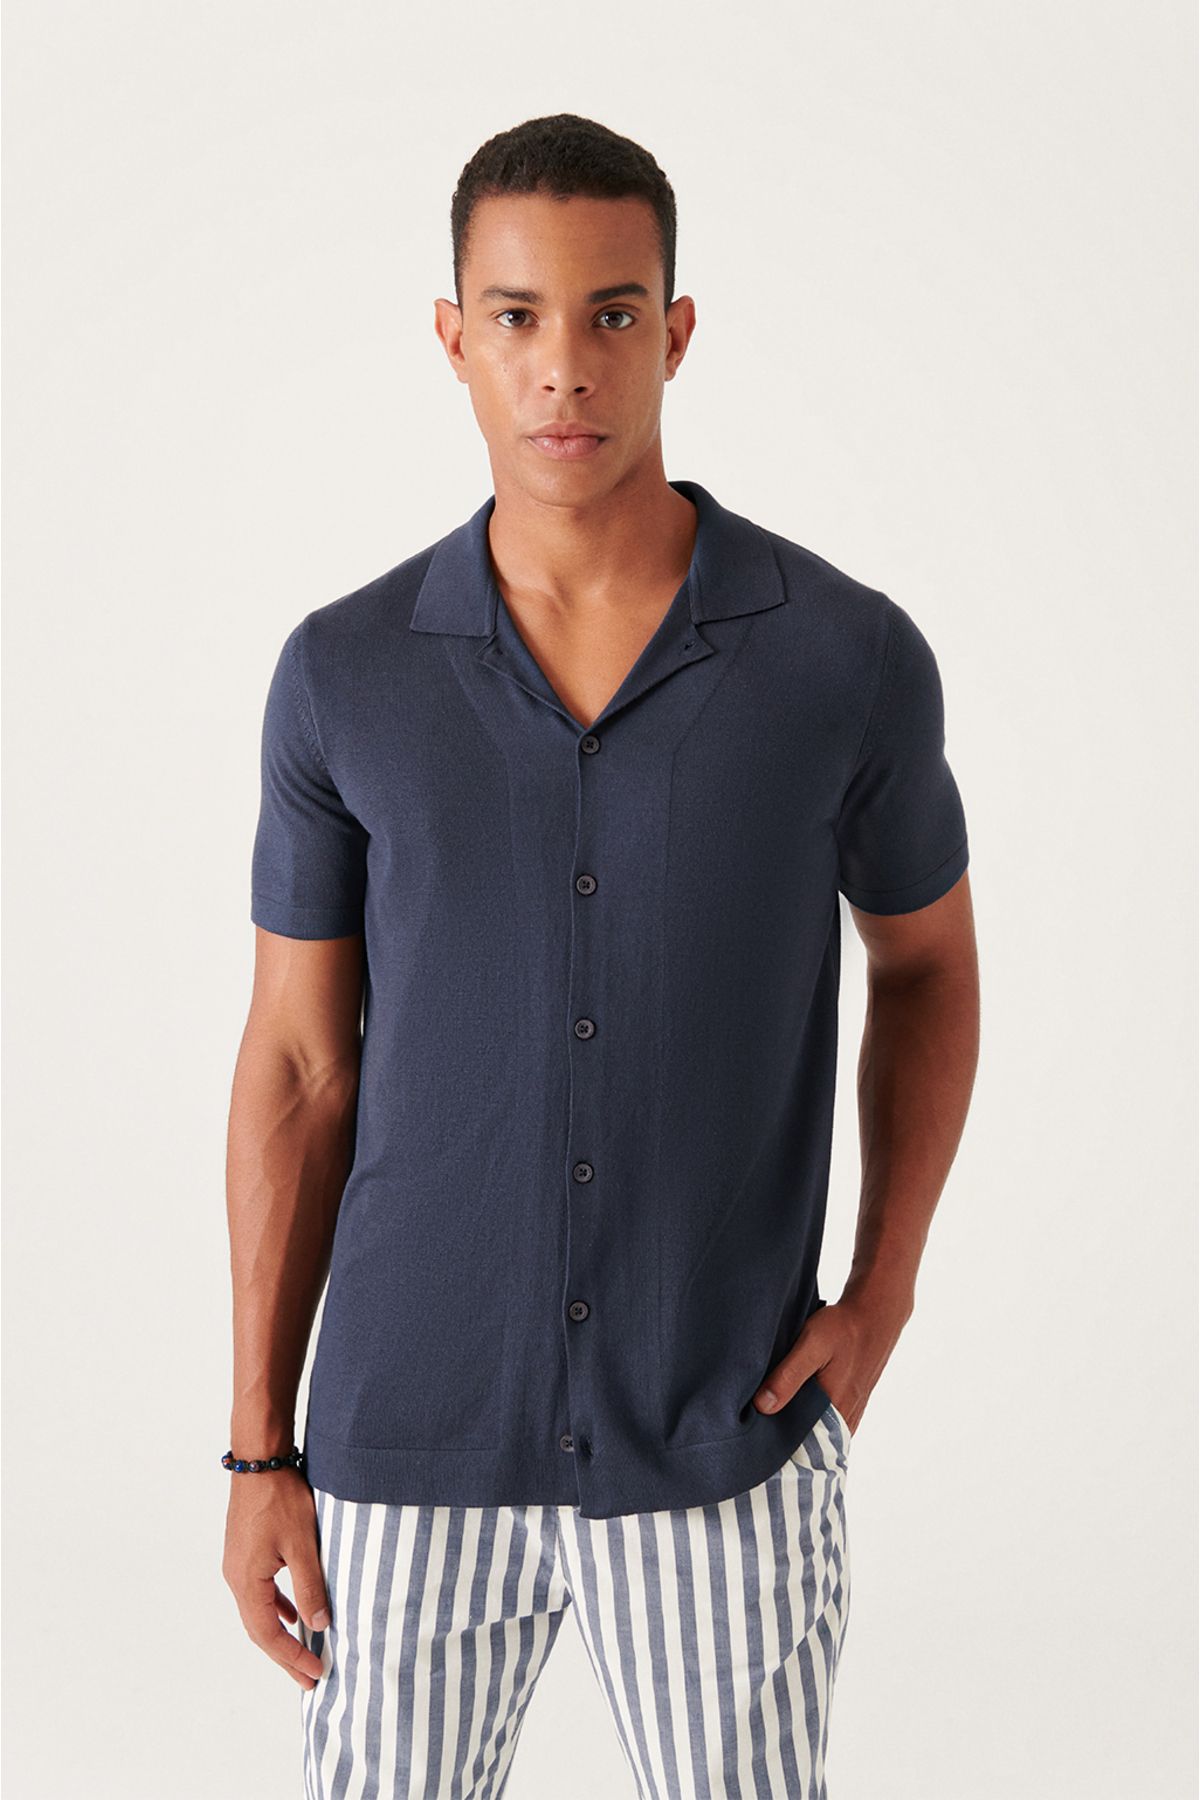 Avva تی شرت بافتنی مردانه یقه آبی سرمه ای کوبایی دکمه دار استاندارد با برش معمولی B005008